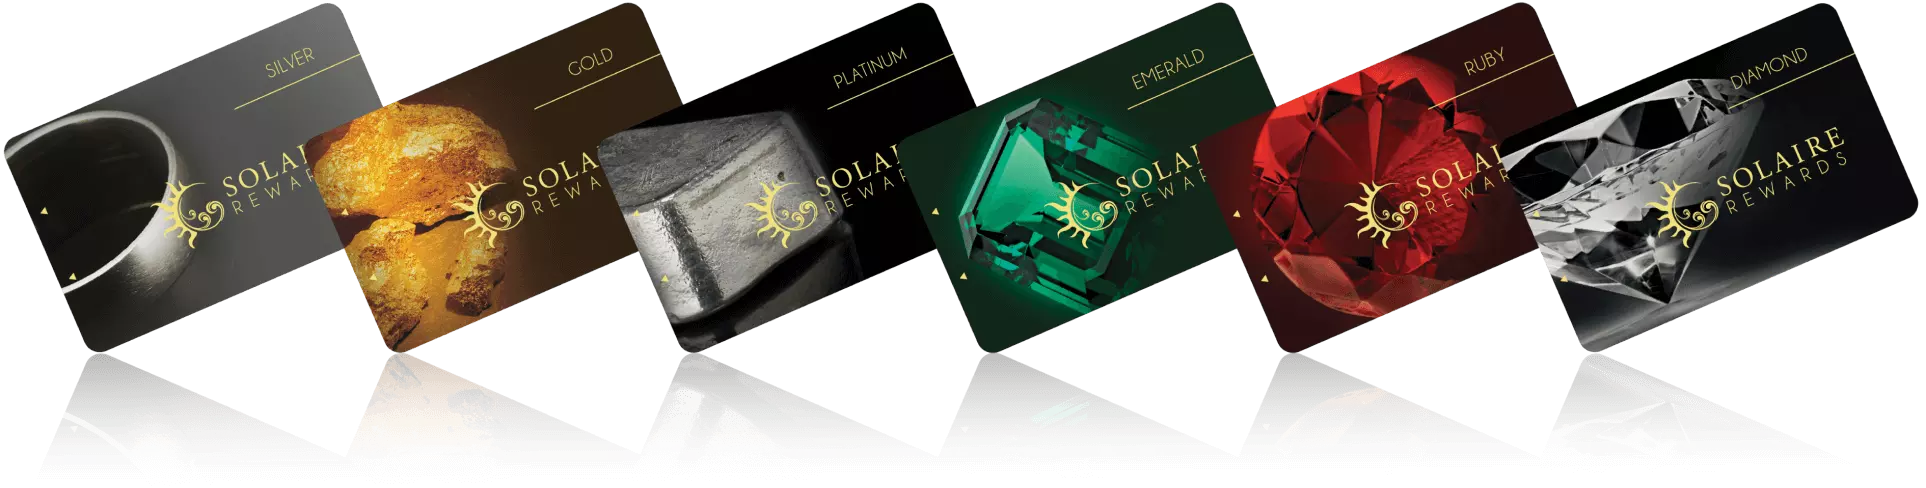 Solaire Rewards Cards Banner